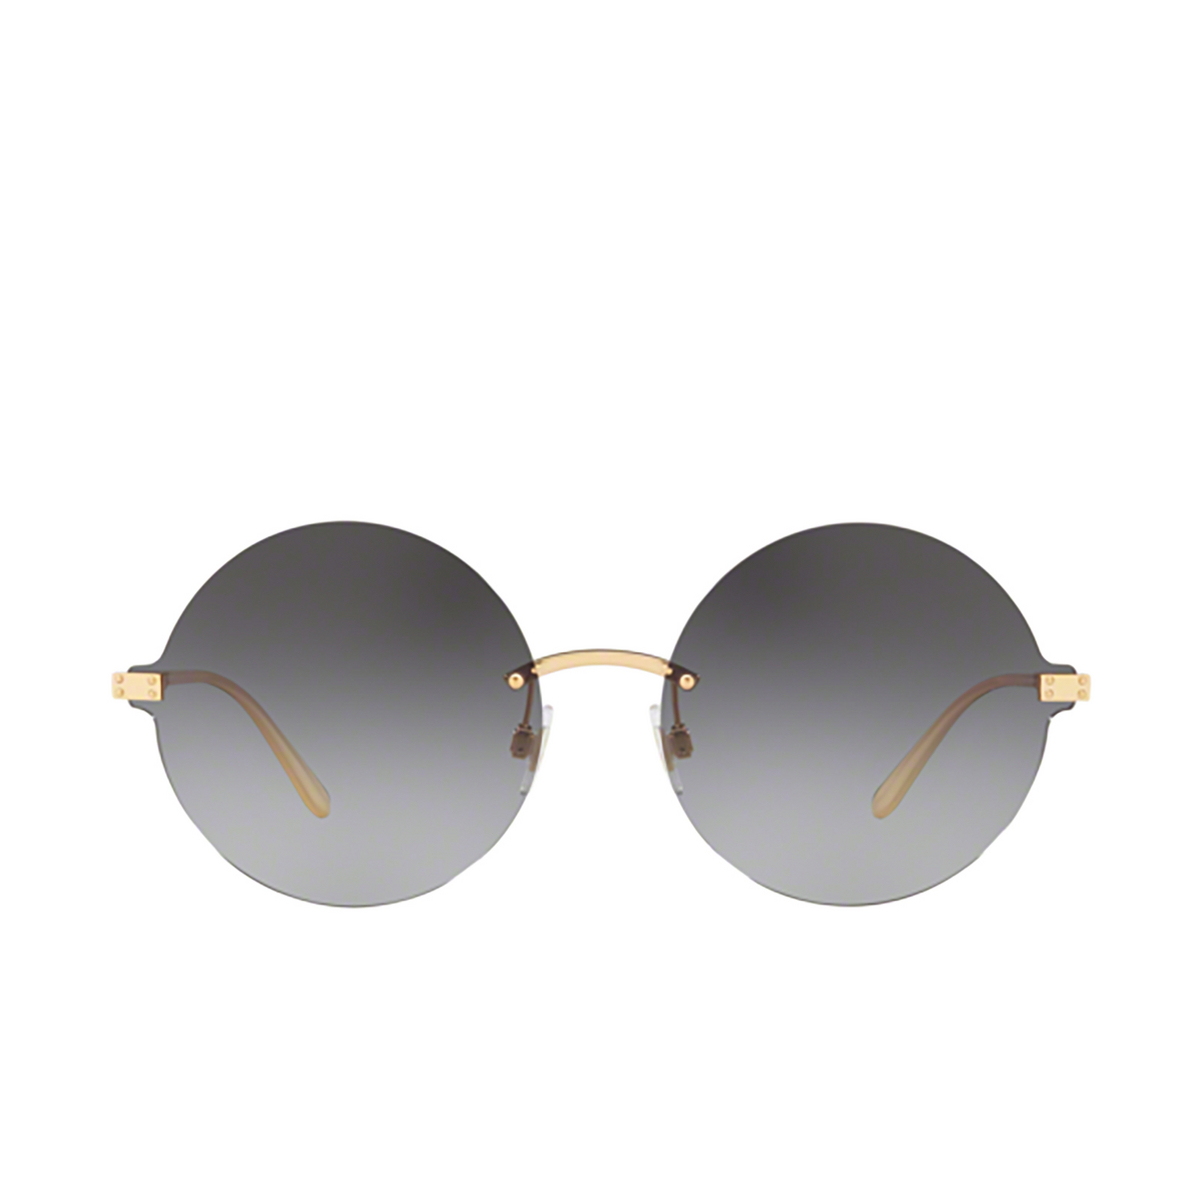 Dolce & Gabbana DG2228 Sunglasses 02/8G GOLD - front view